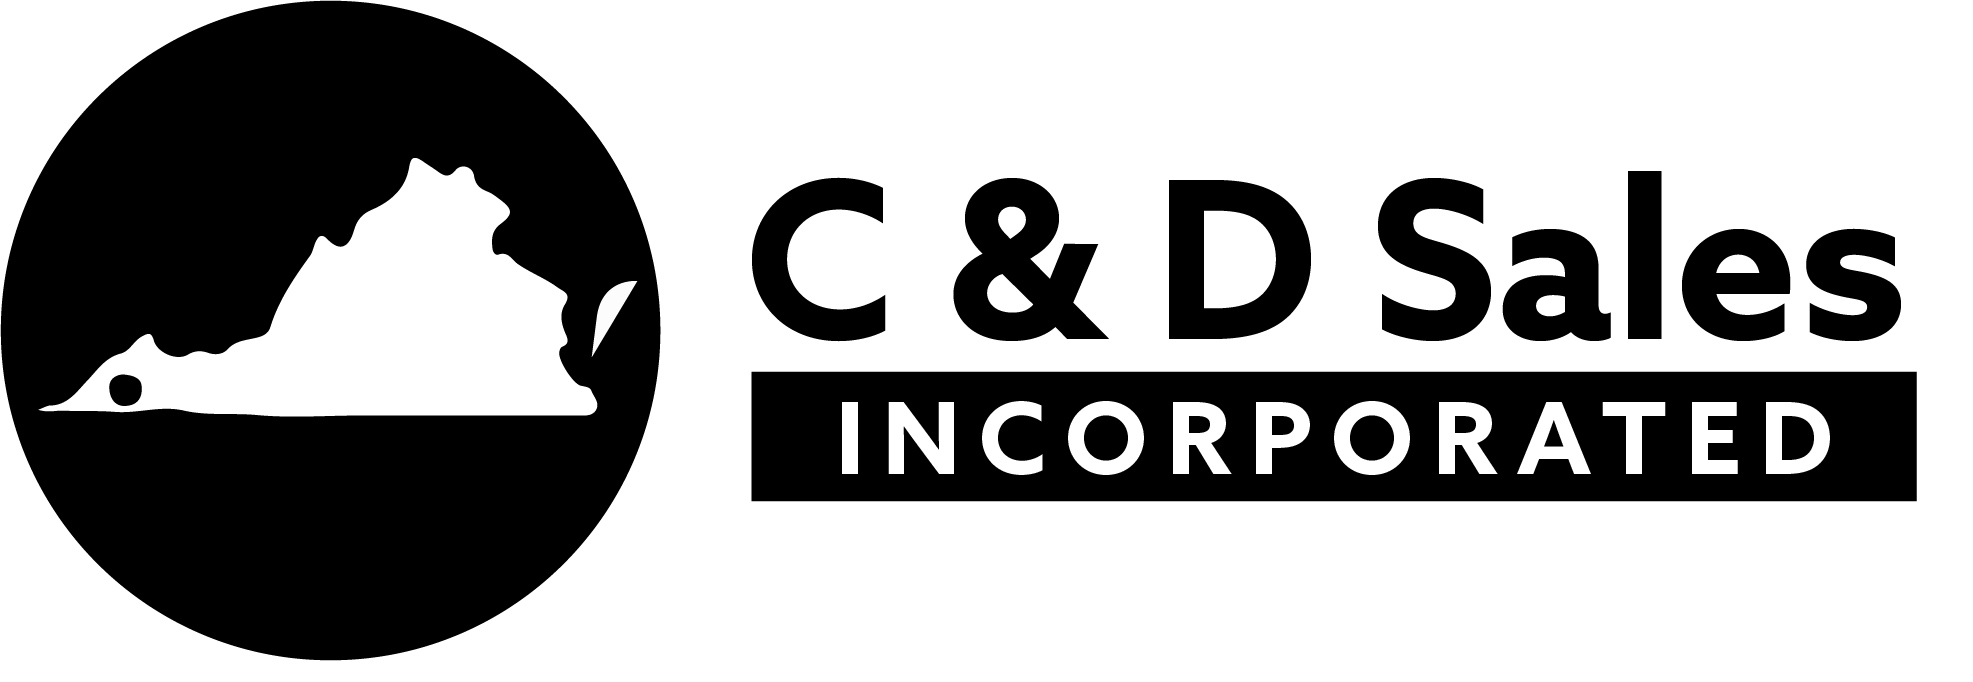 C & D Sales